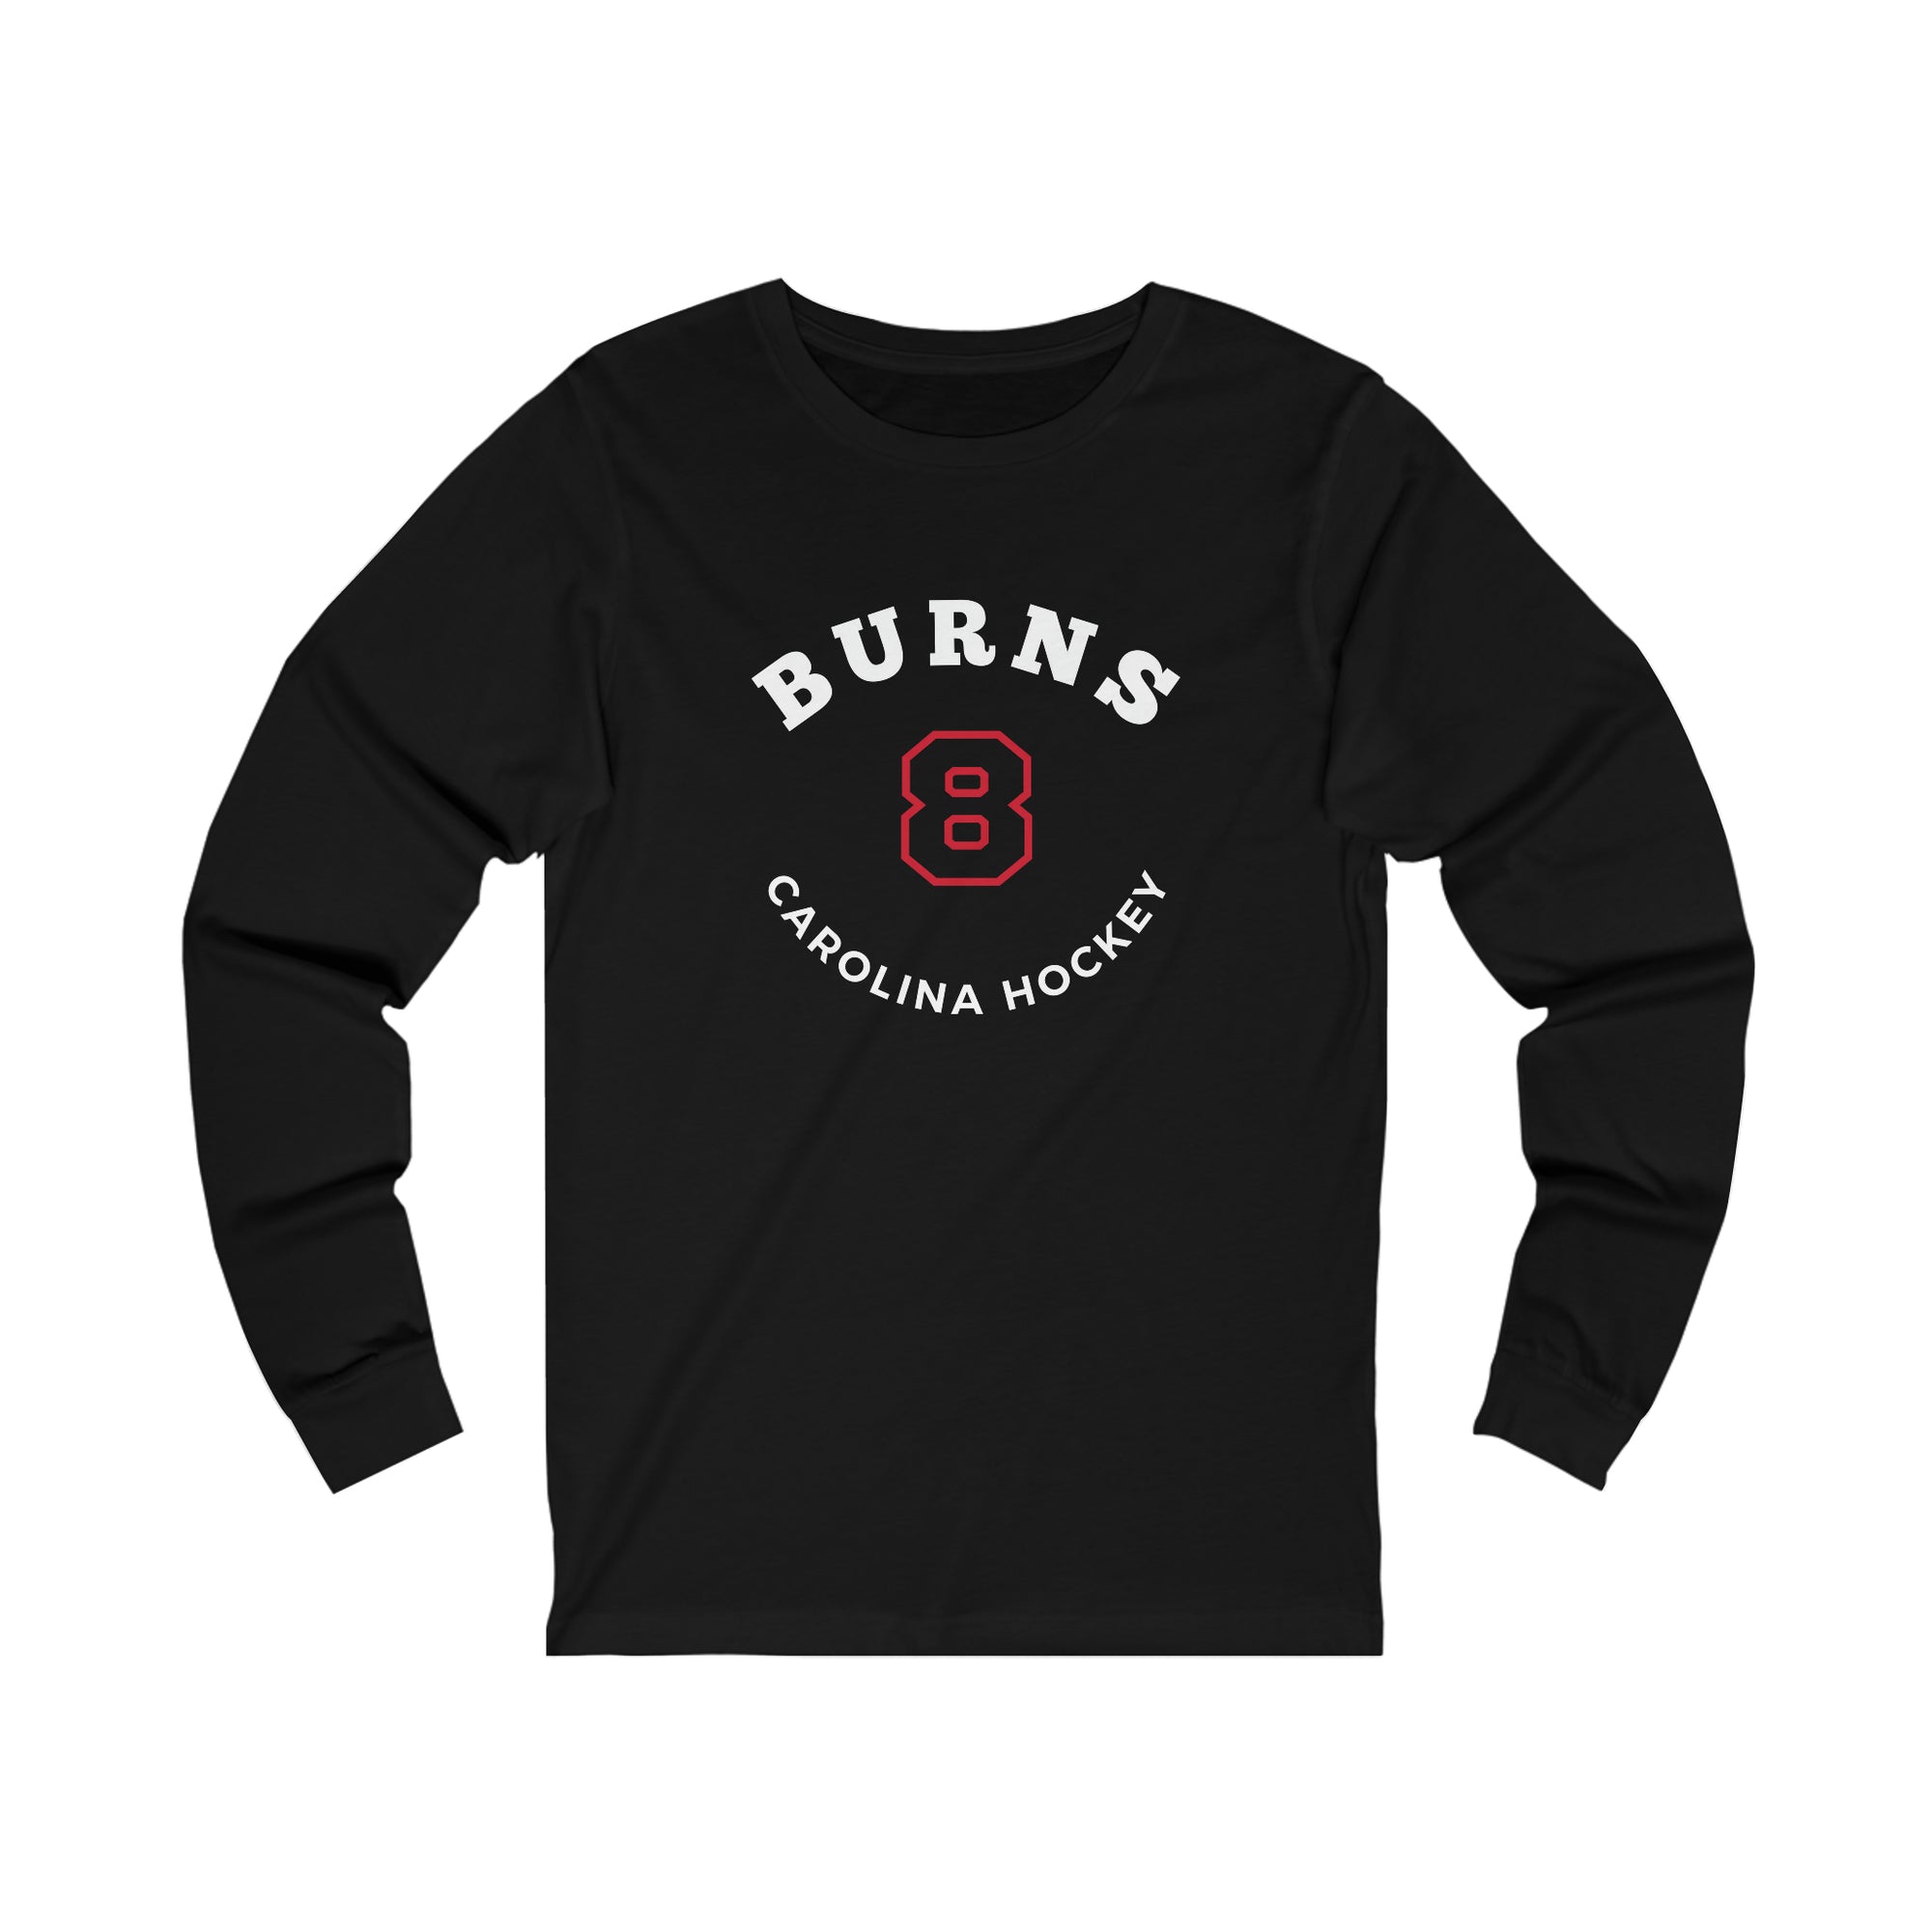 Burns 8 Carolina Hockey Number Arch Design Unisex Jersey Long Sleeve Shirt